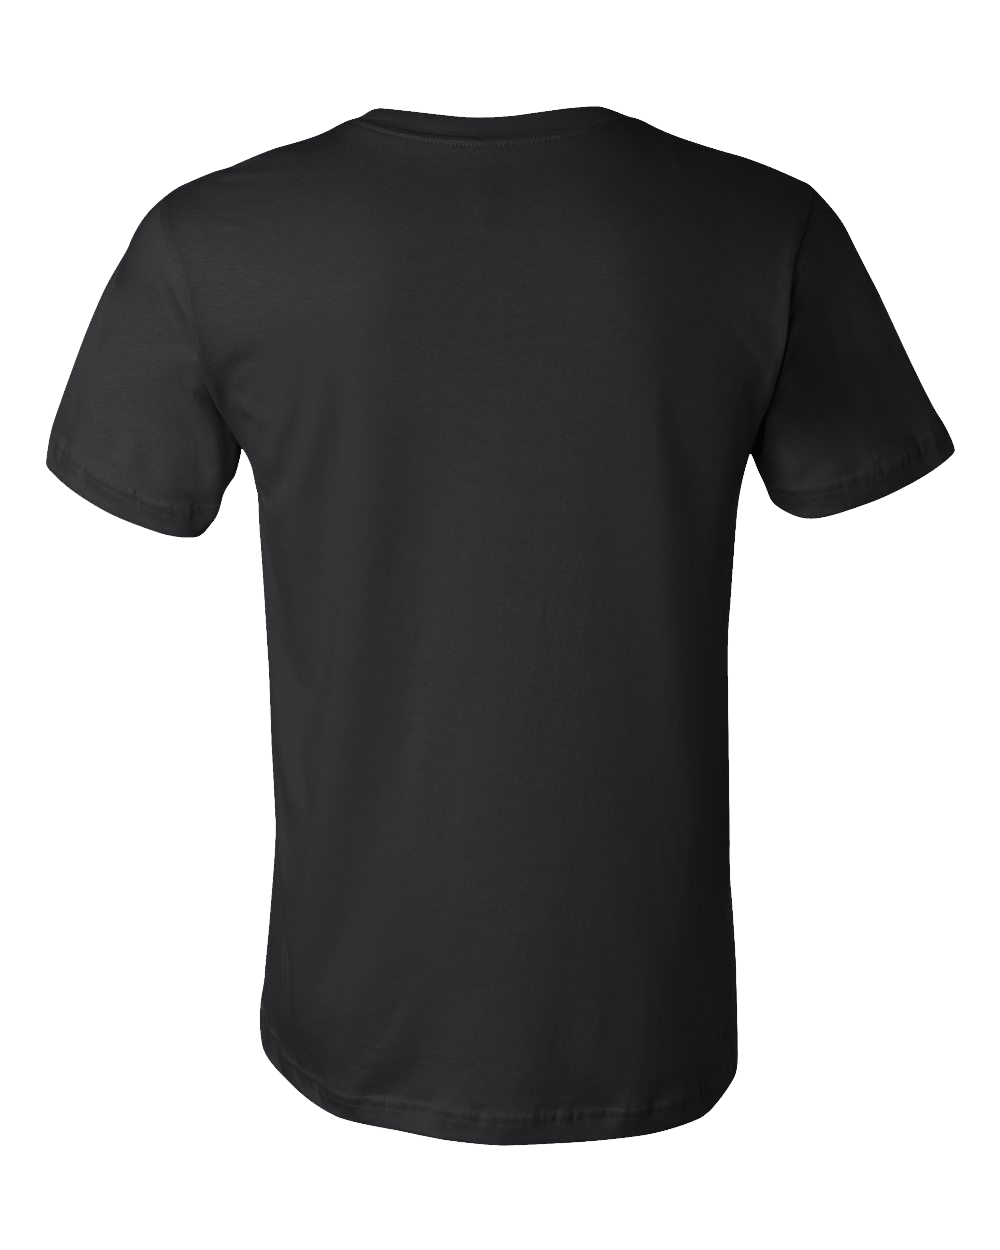 Standard Black Leslie, MI | Retro, Vintage Style Michigan Pride  T-shirt